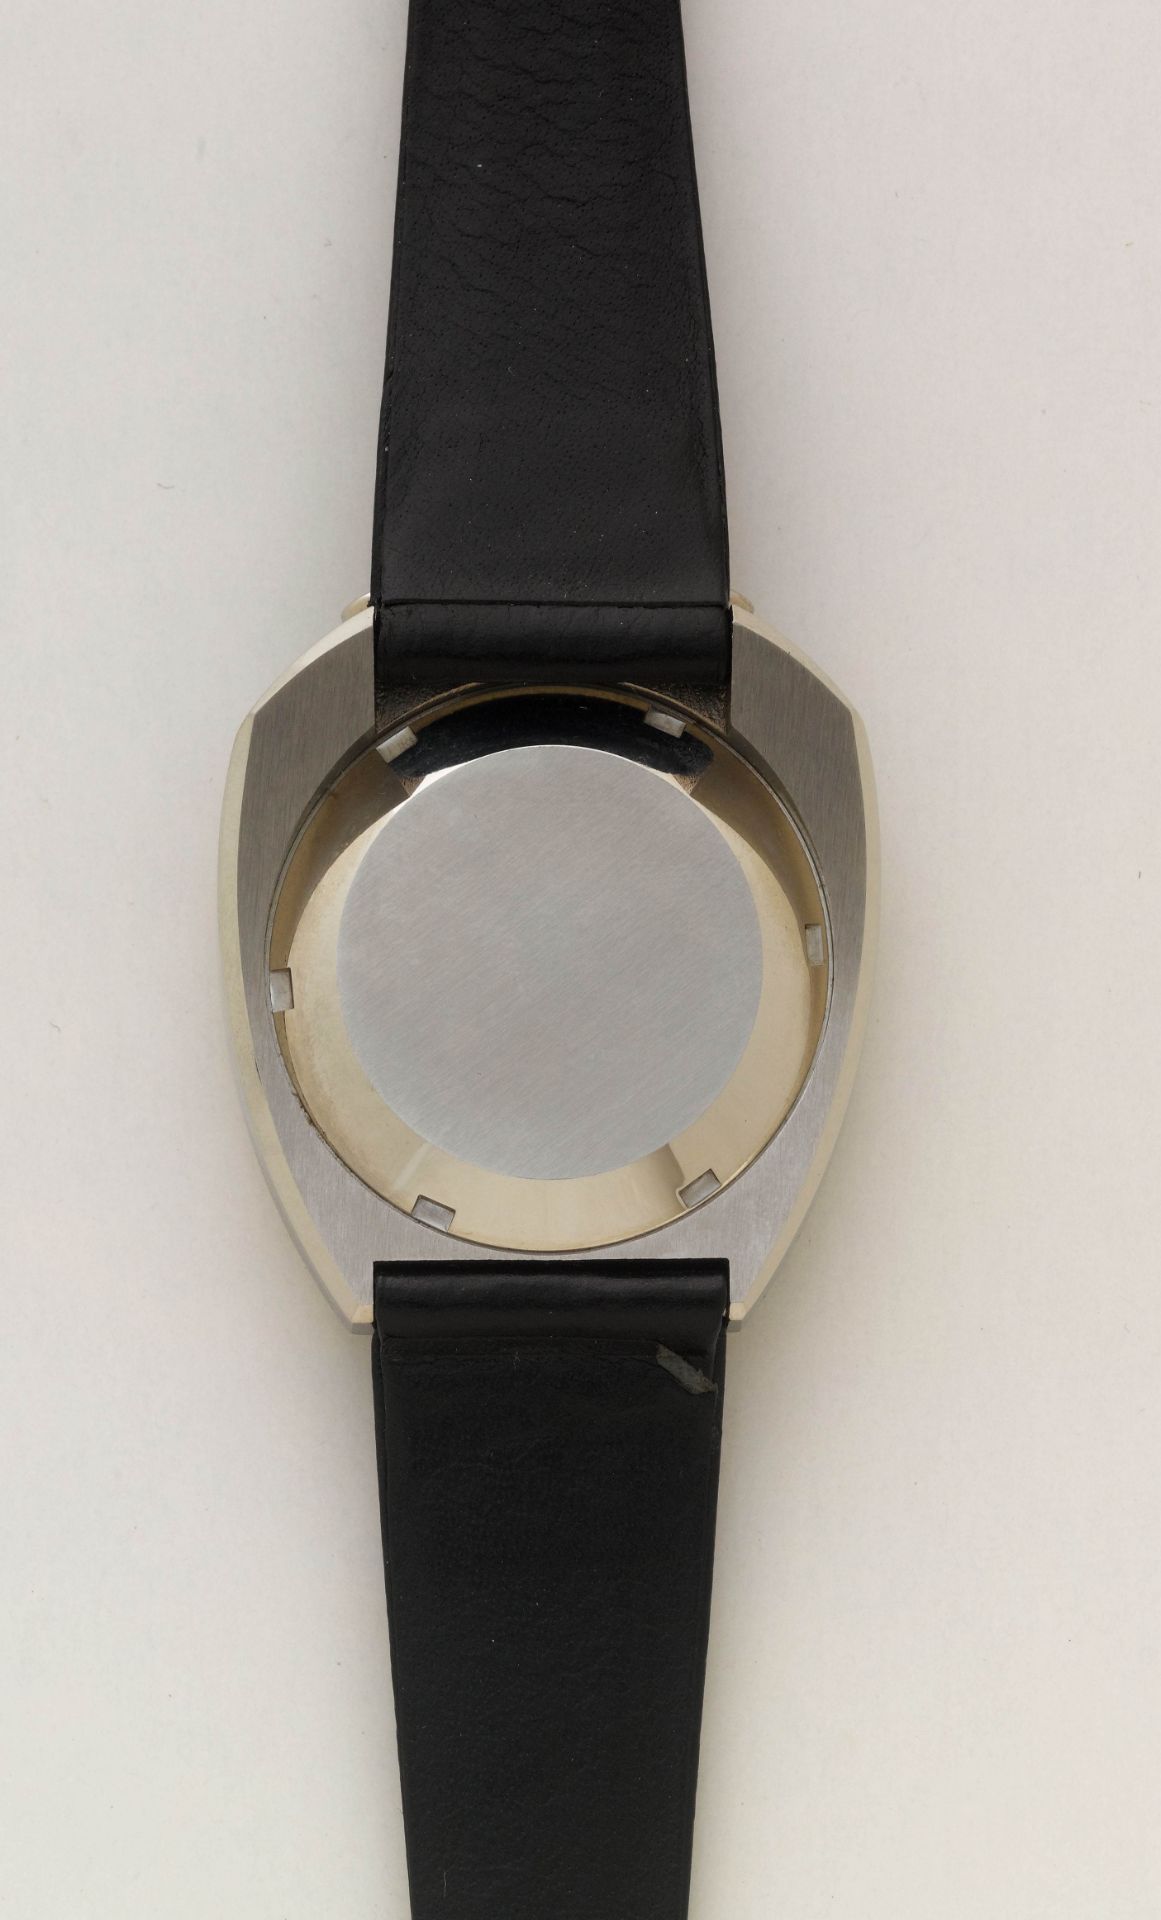 Lemania, extraordinary Chronograph, so-called "Bullhead", 1970s. - Image 2 of 5